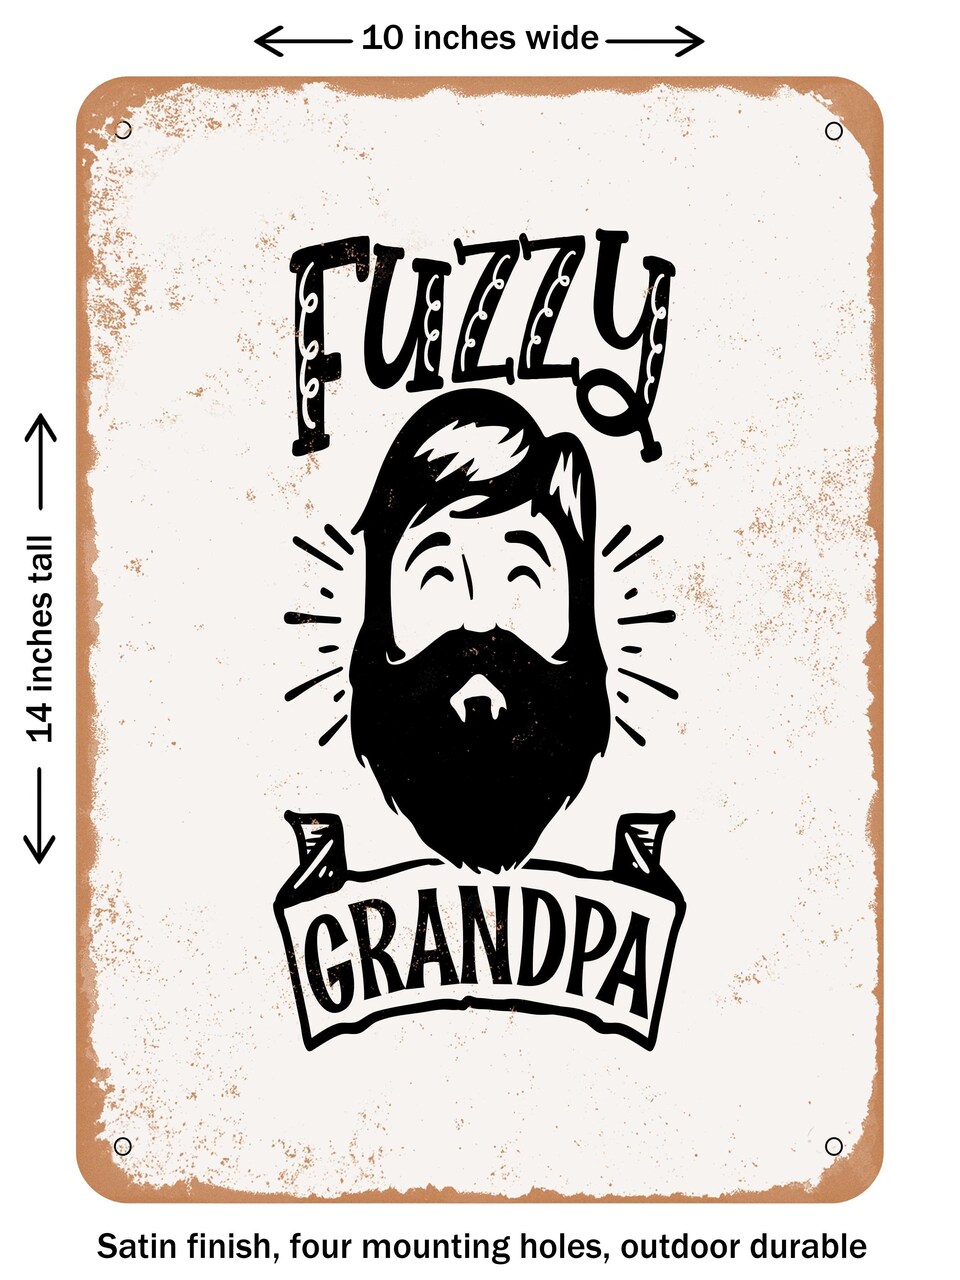 DECORATIVE METAL SIGN - Fuzzy Grandpa  - Vintage Rusty Look